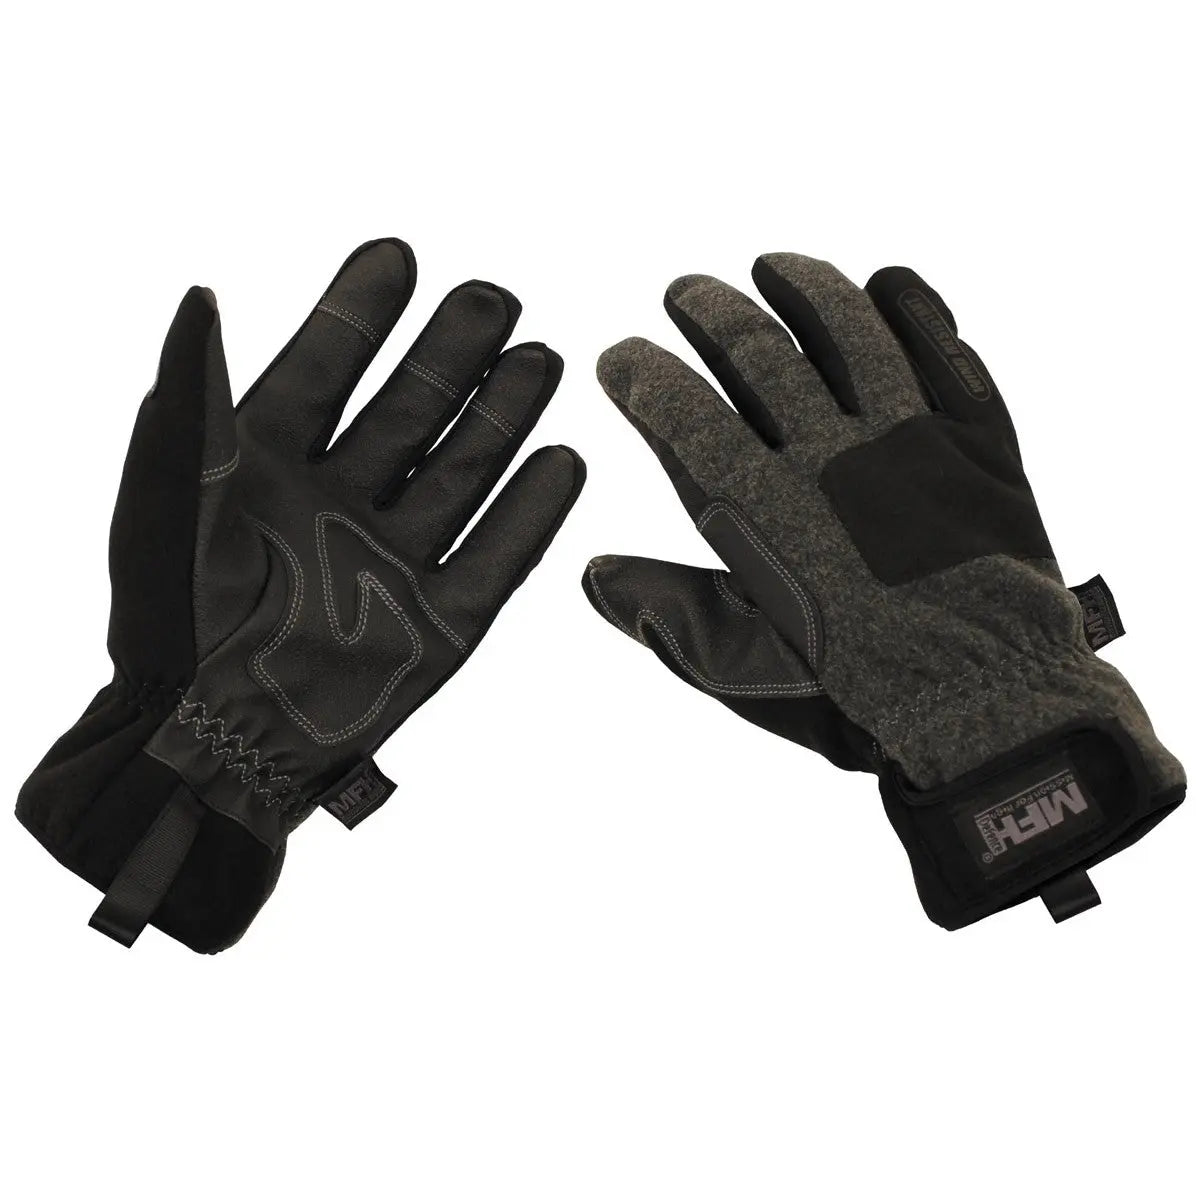 Gloves, "Cold Time", wind resistant, grey